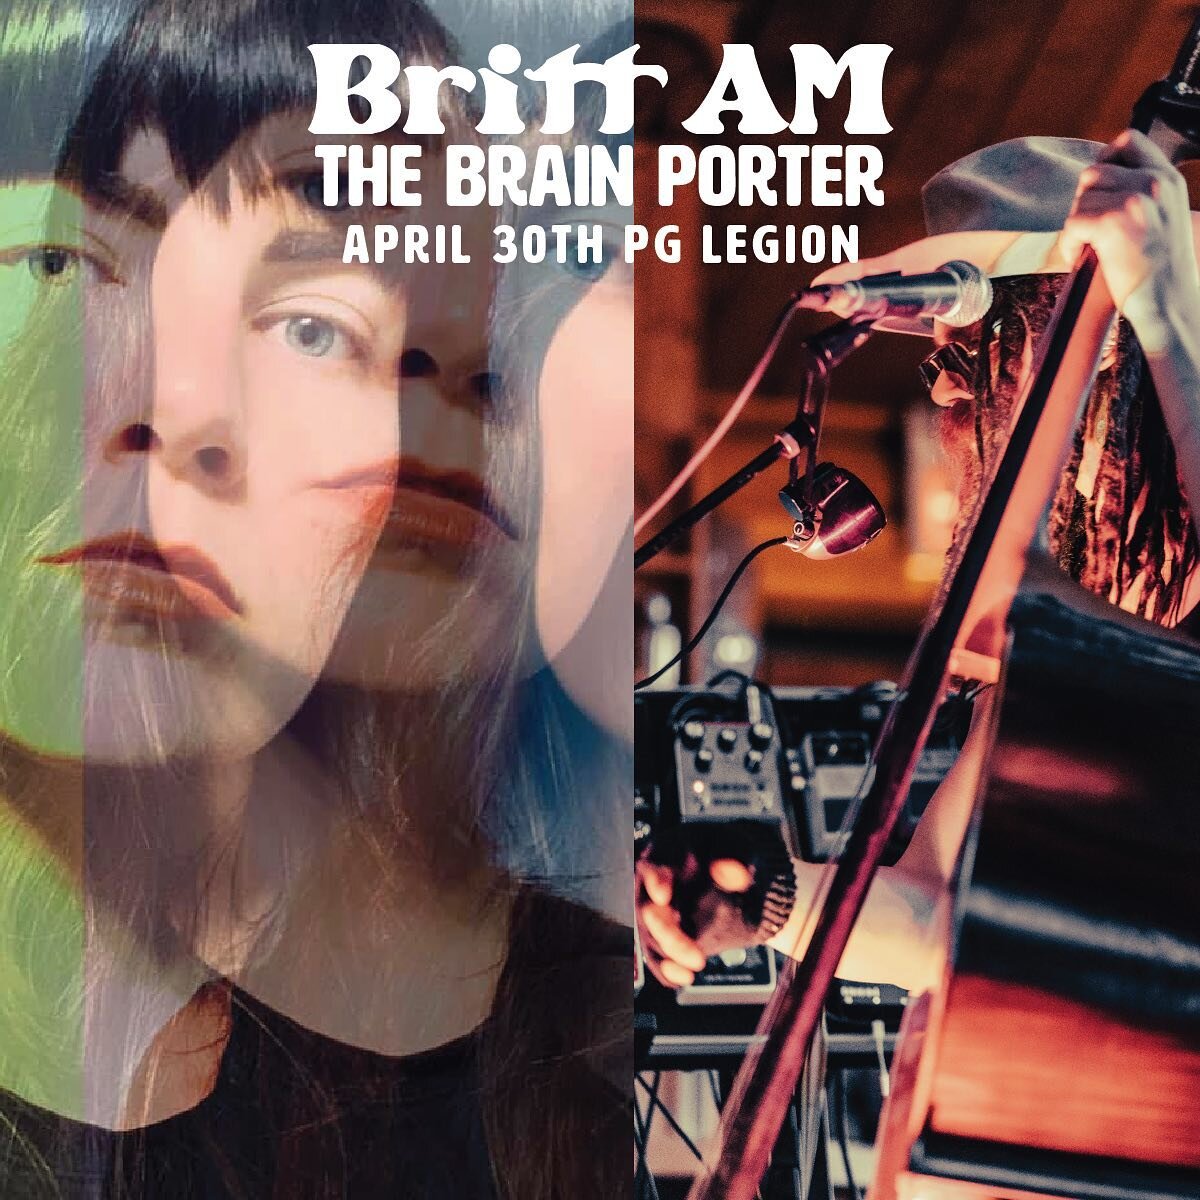 Britt AM and The Brain Porter April 30th!  Ticket link in bio. 
.
@thebrainporter @thisisbrittam @legion43pg  #princegeorgebc #madloon #takeonpg #peegleeg #bcmusic #northernbc #livemusic